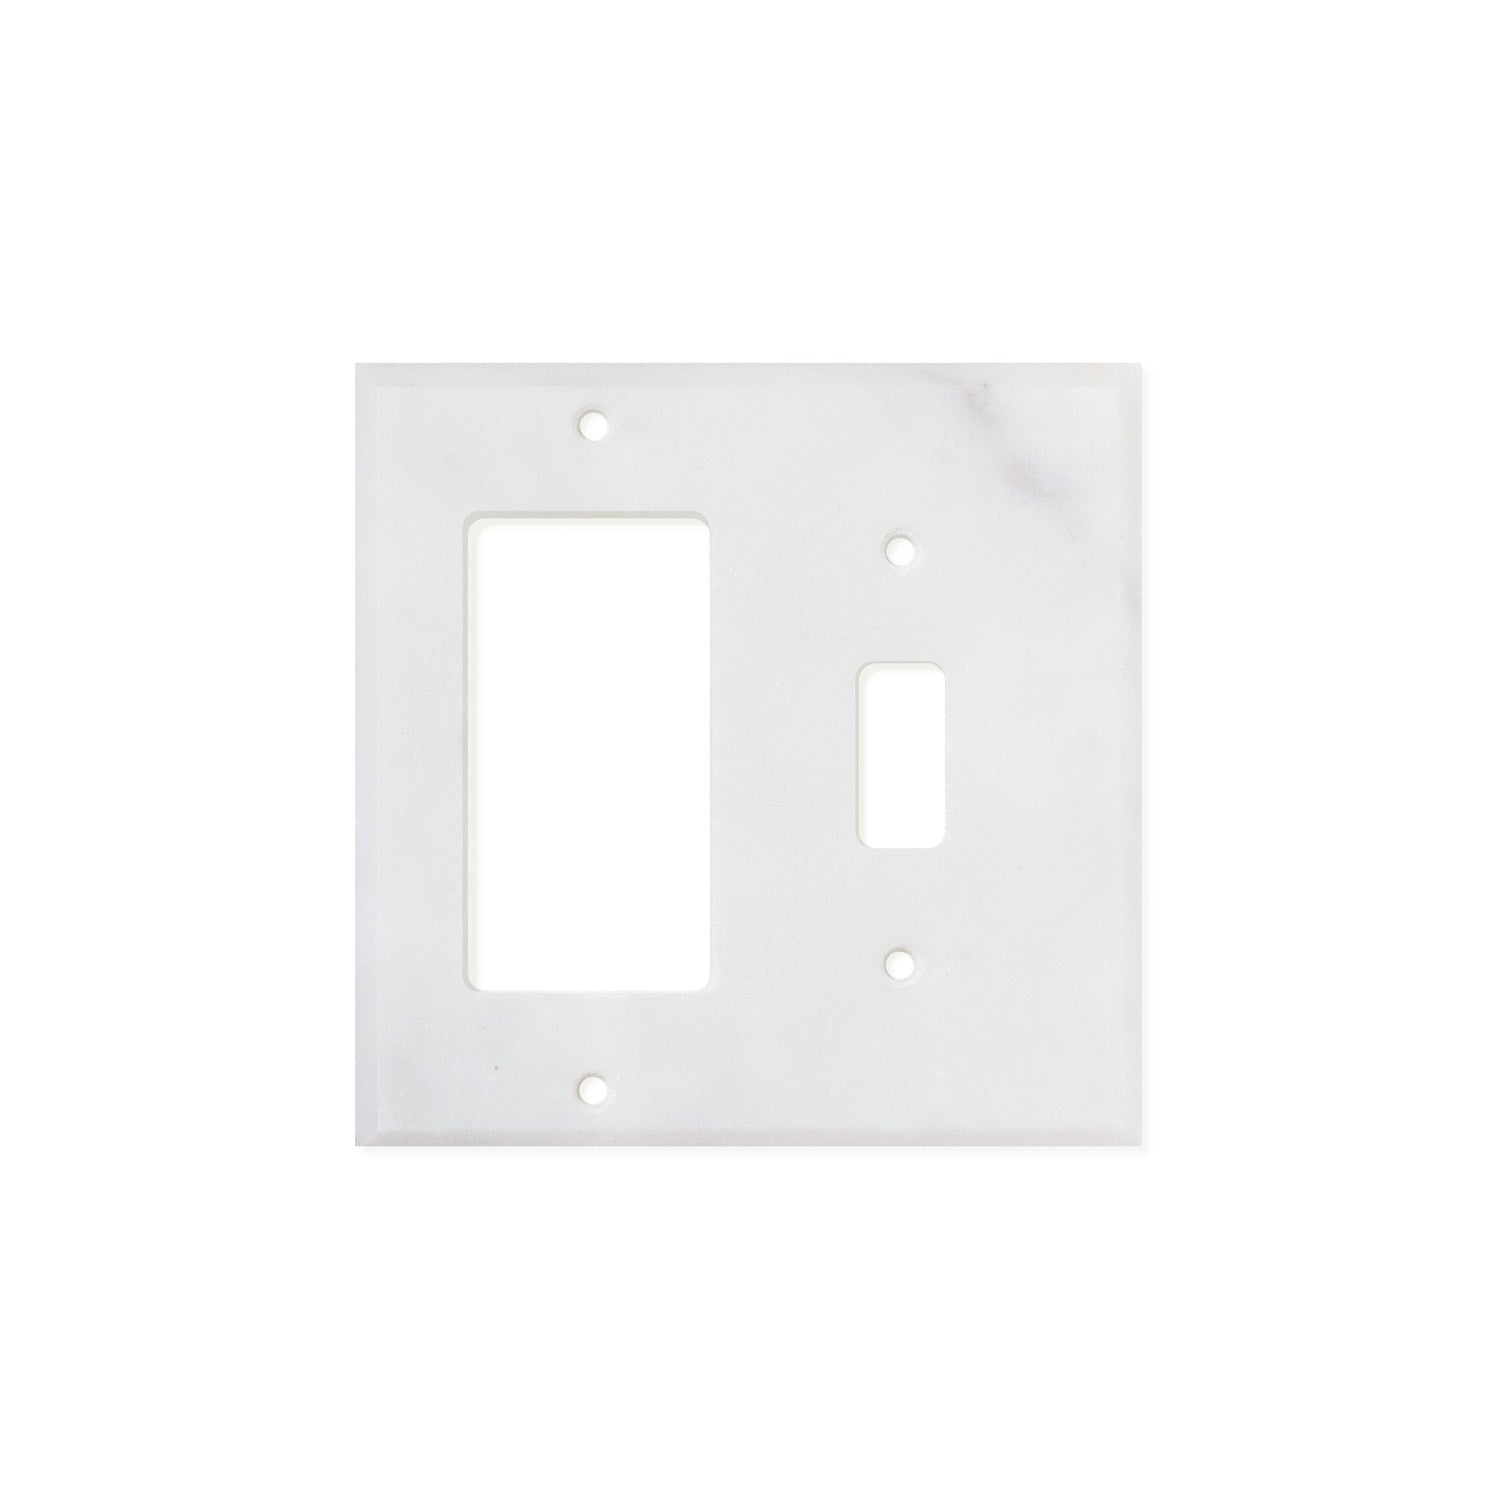 Bianco Carrara (Carrara White) Marble Switch Plate Cover, Polished (TOGGLE ROCKER) - Tilephile